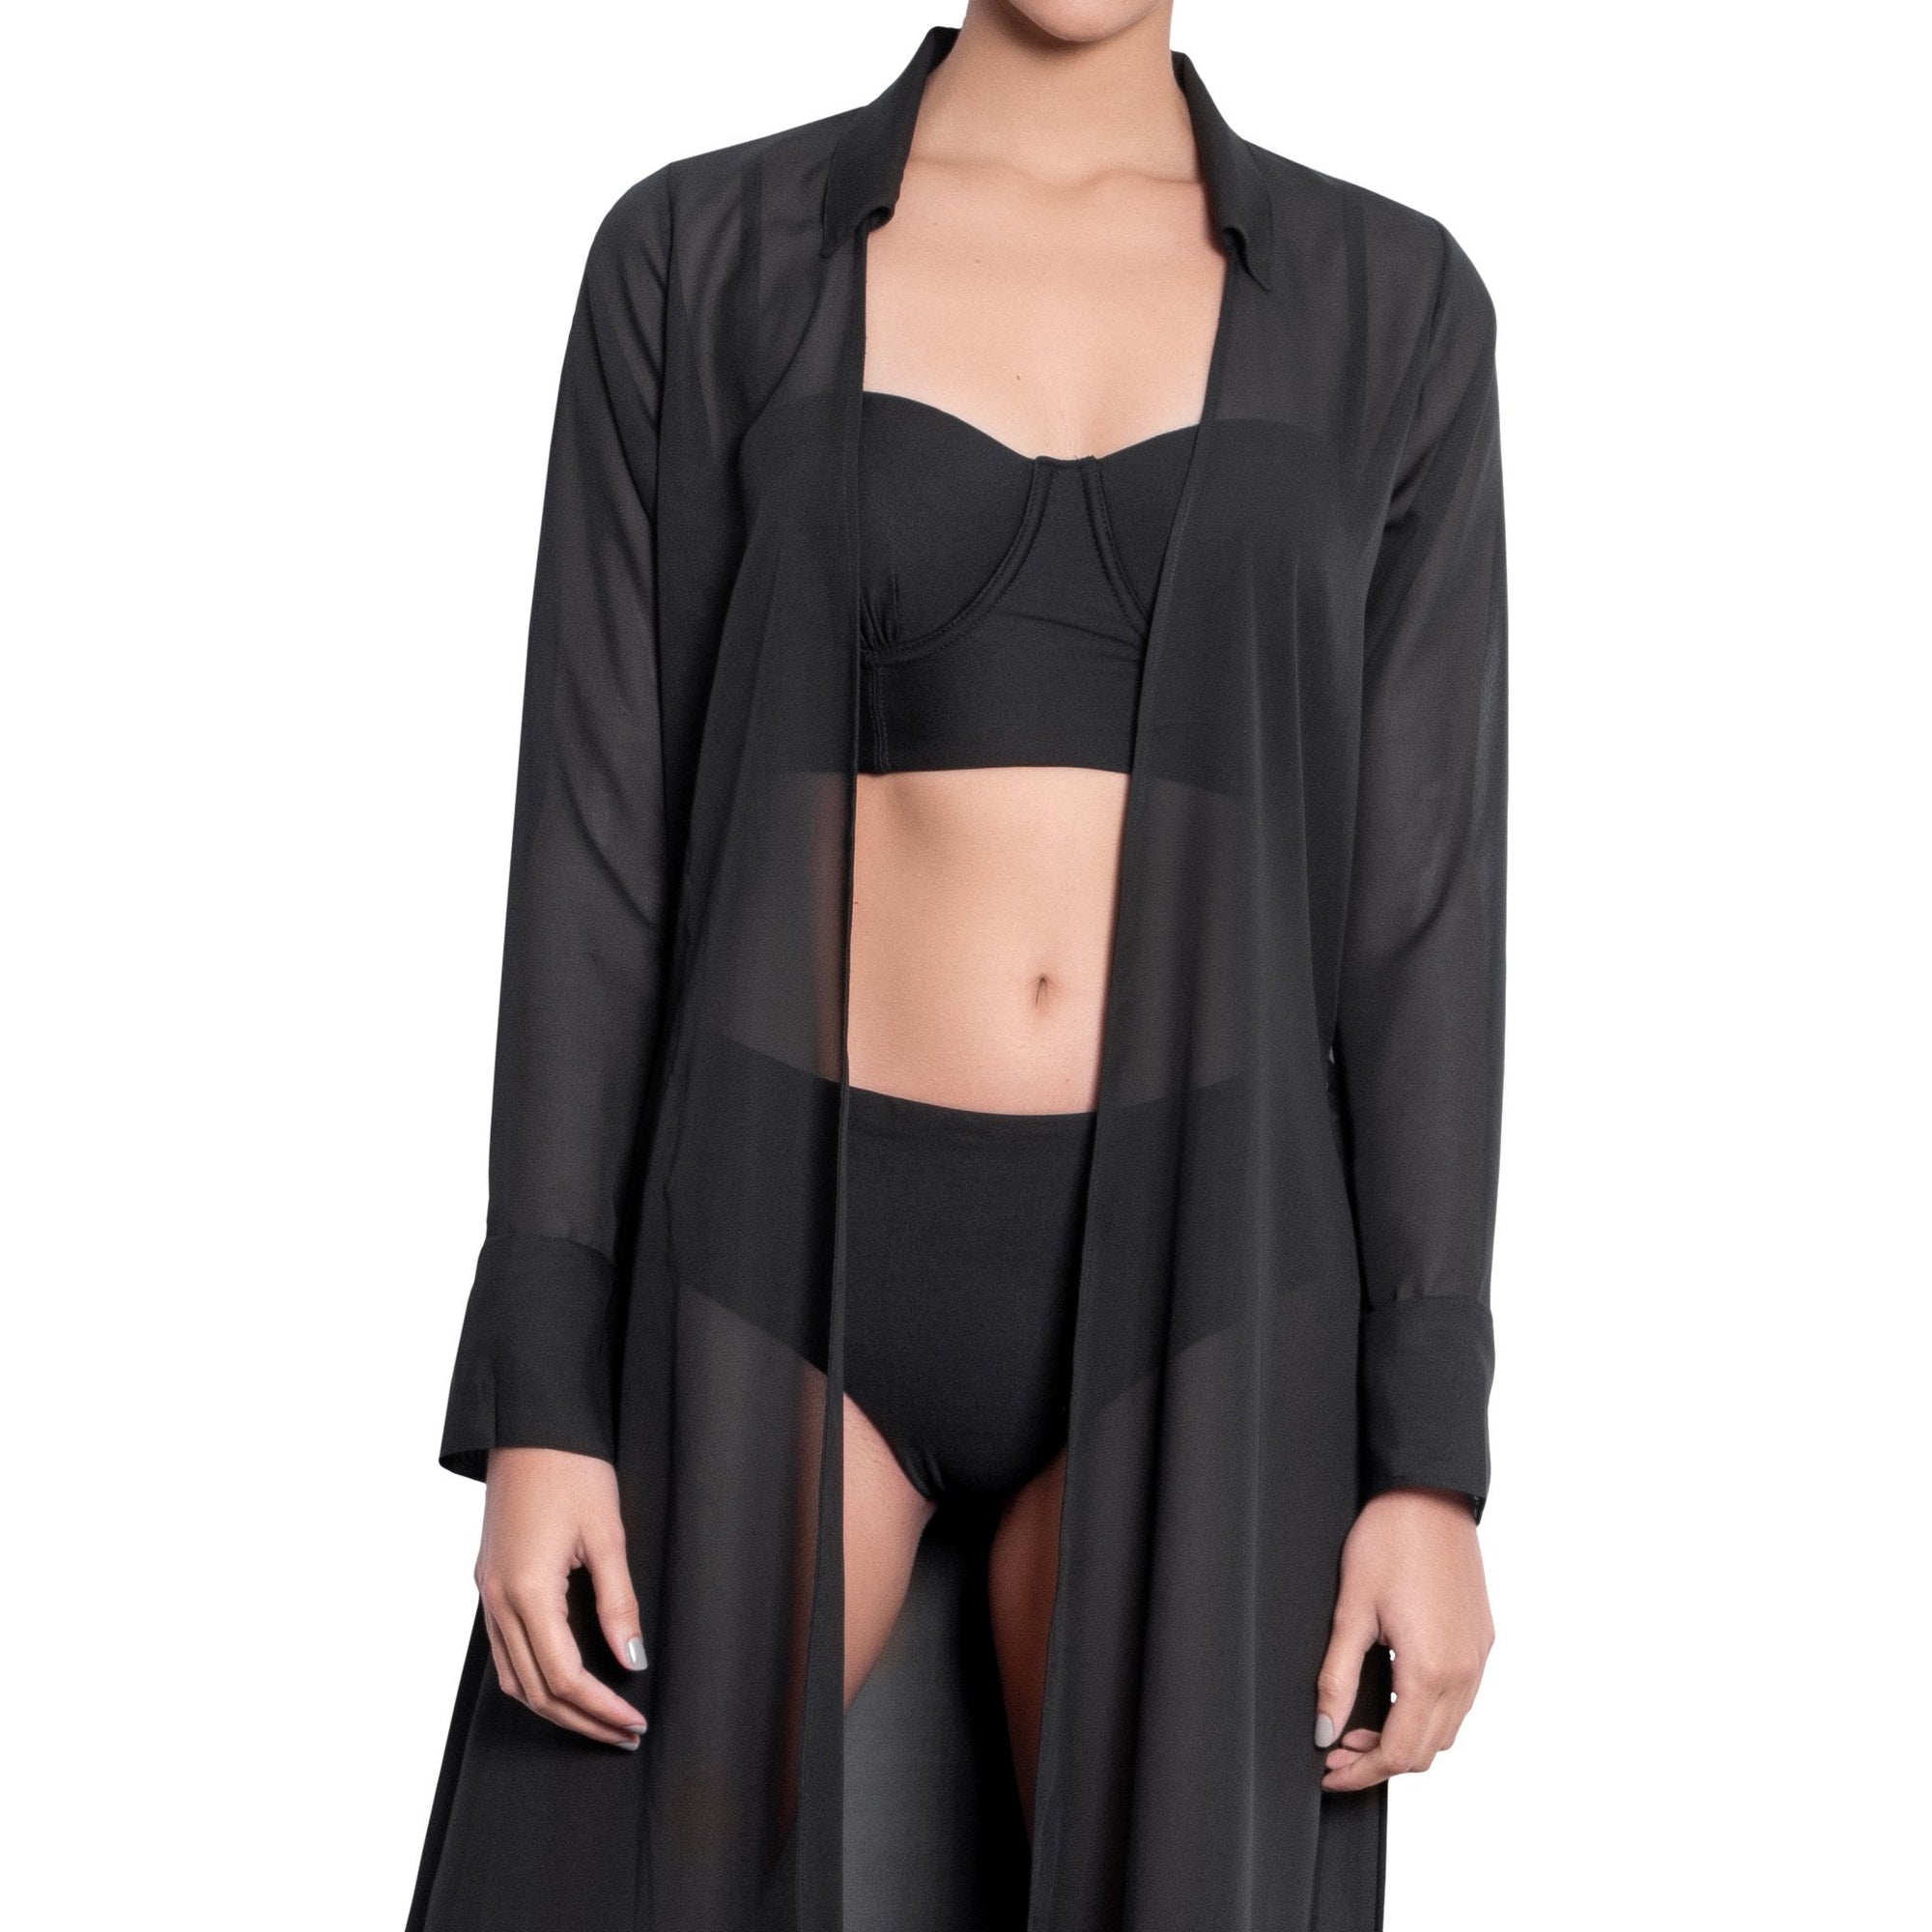 L√âA long shirtdress, black chiffon cover up by ALMA swimwear ‚Äì front view 1